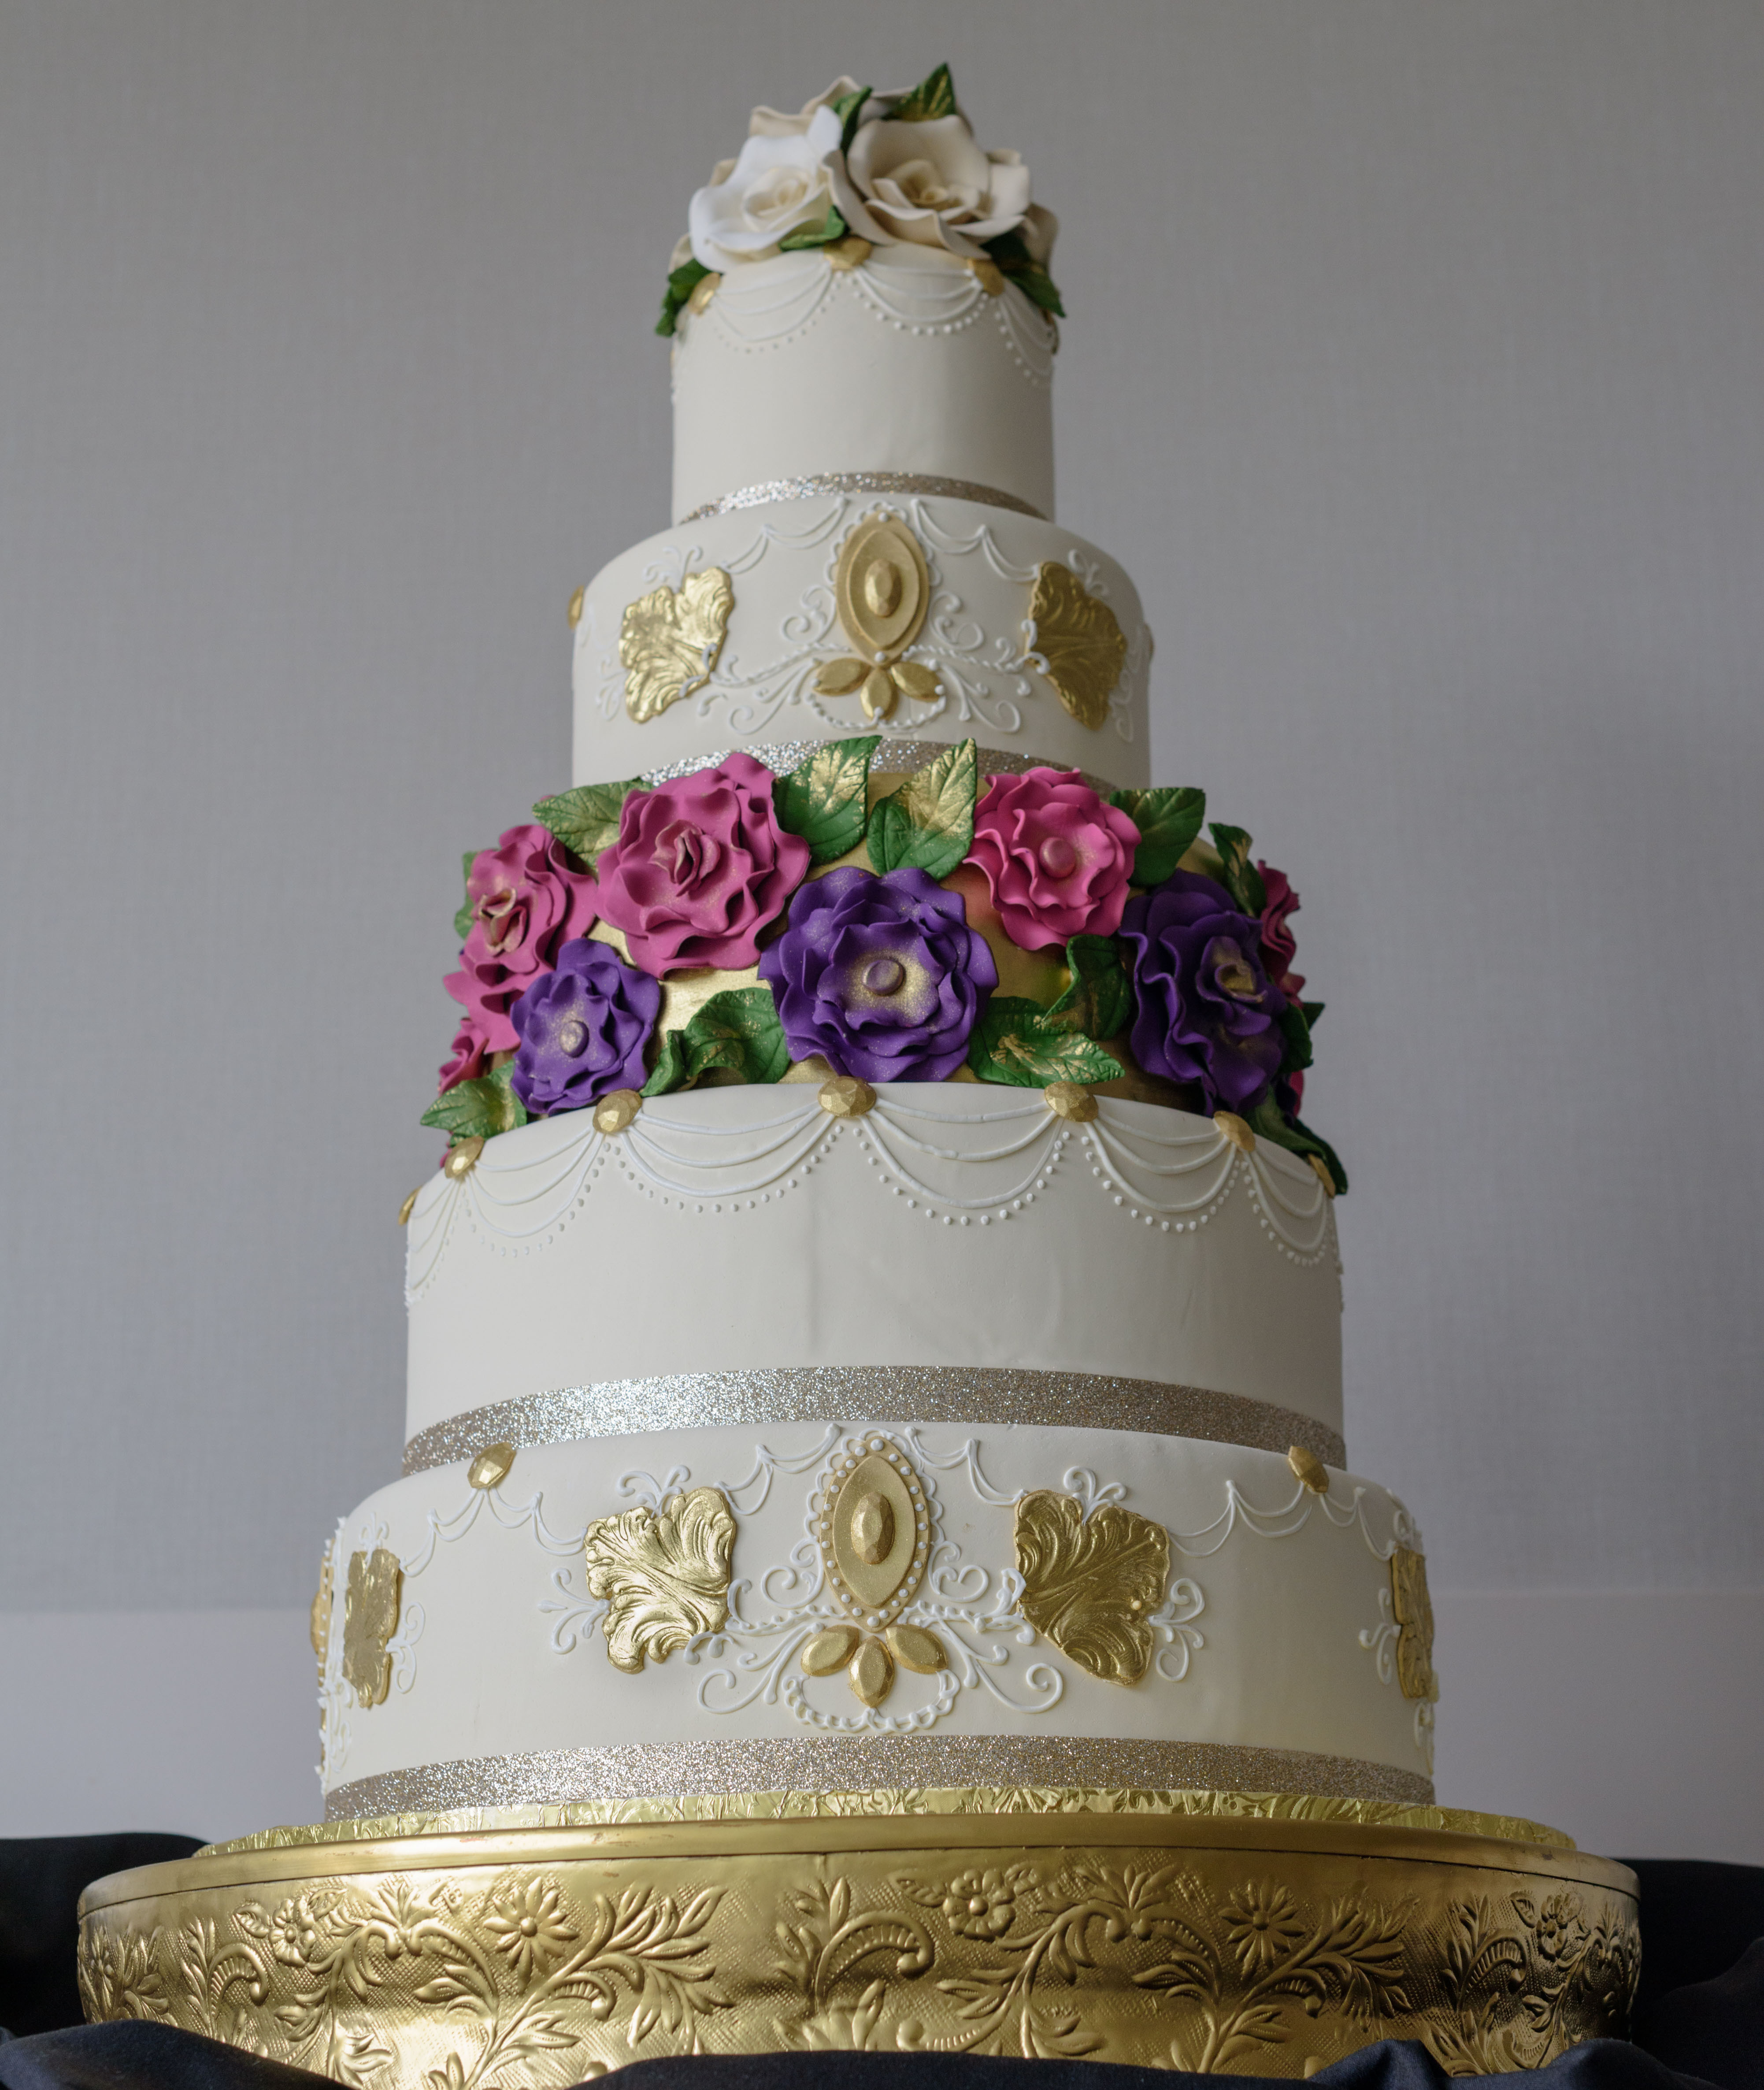 5 Tier Wedding Cakes
 Ornate Five Tier Wedding Cake by Konditor Meister